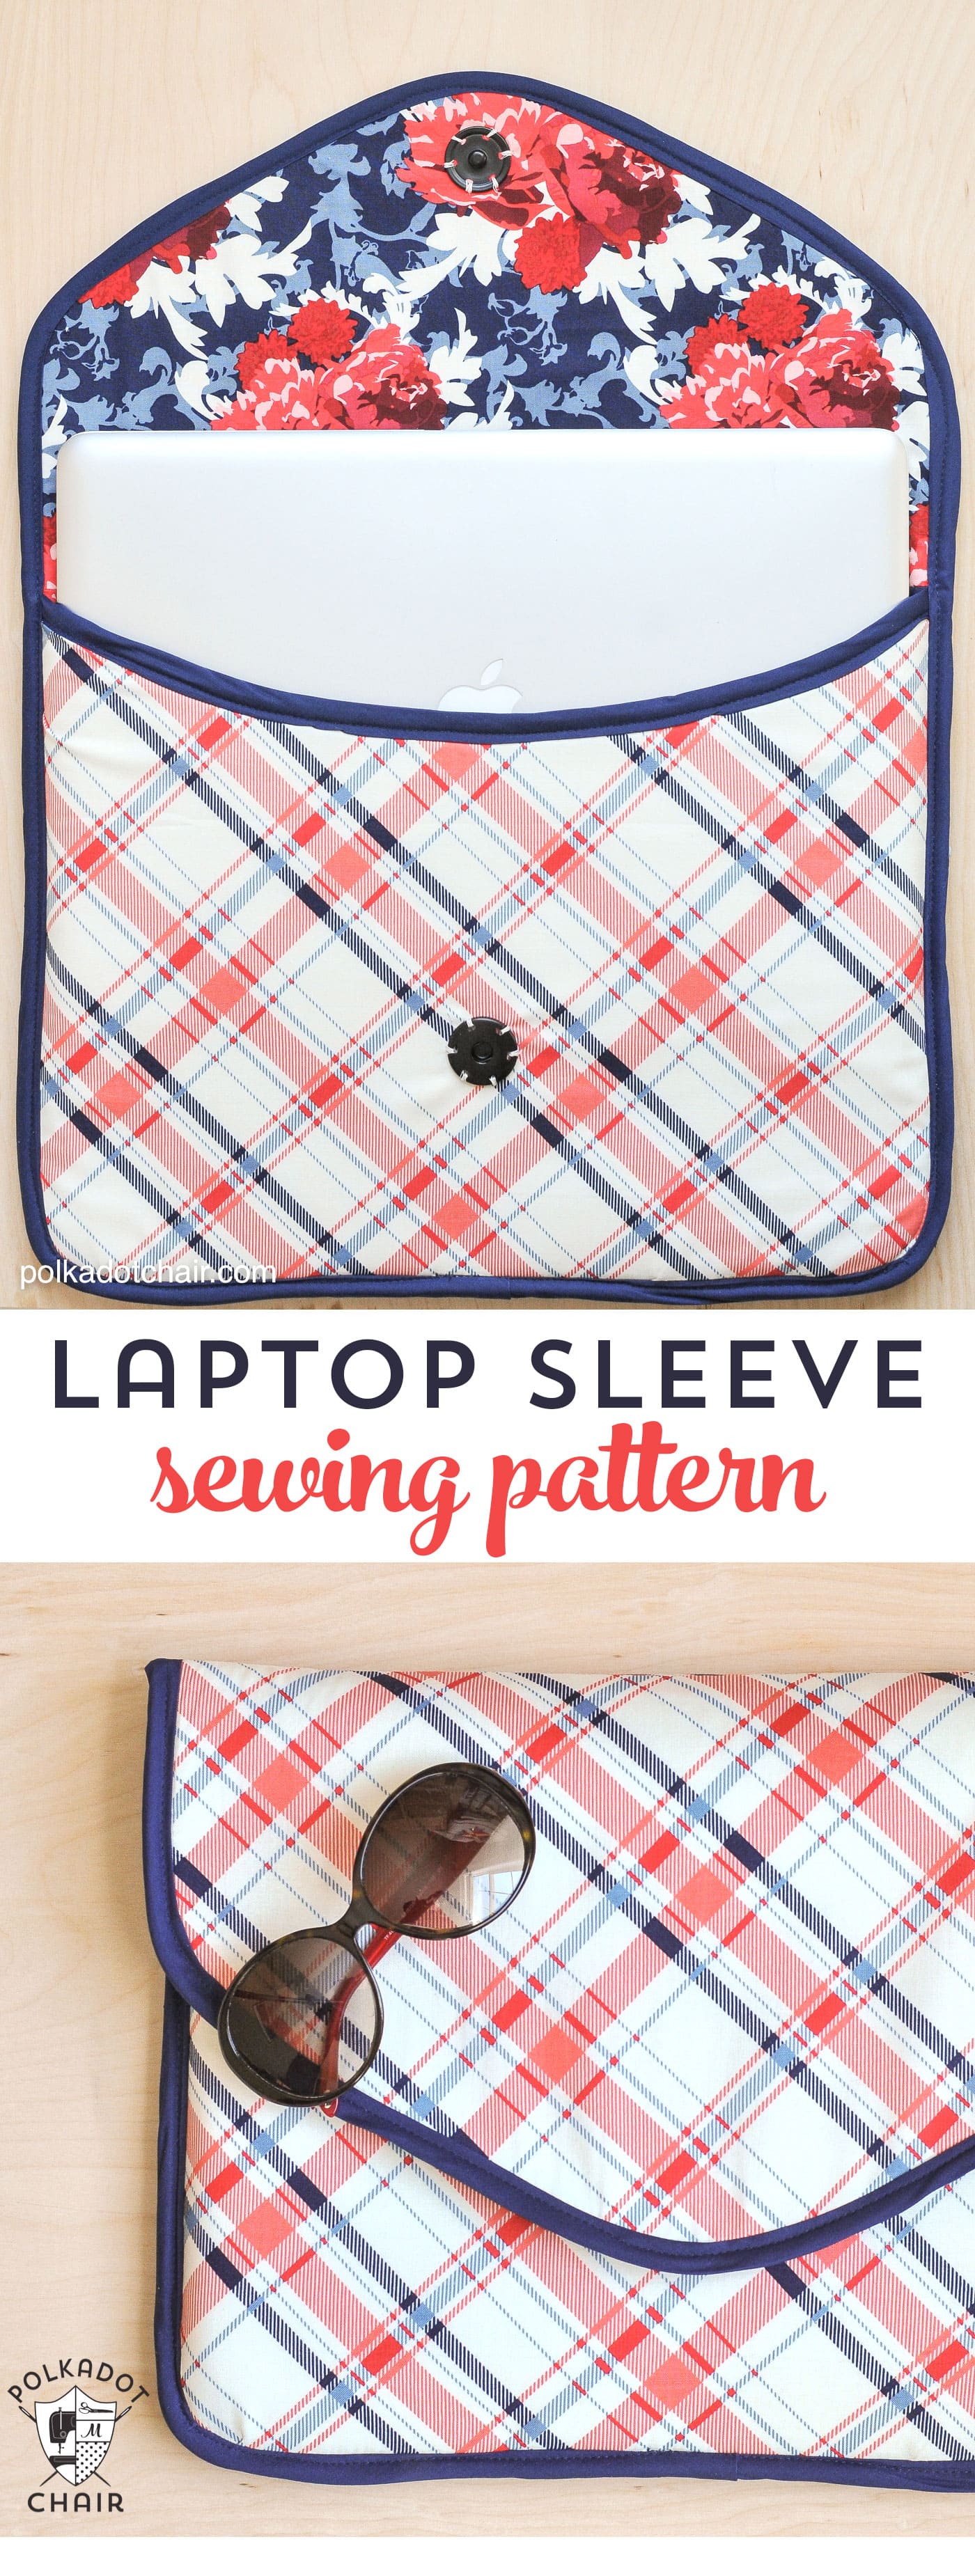 DIY Laptop Sleeve Clutch Sewing Pattern on Polka Dot Chair